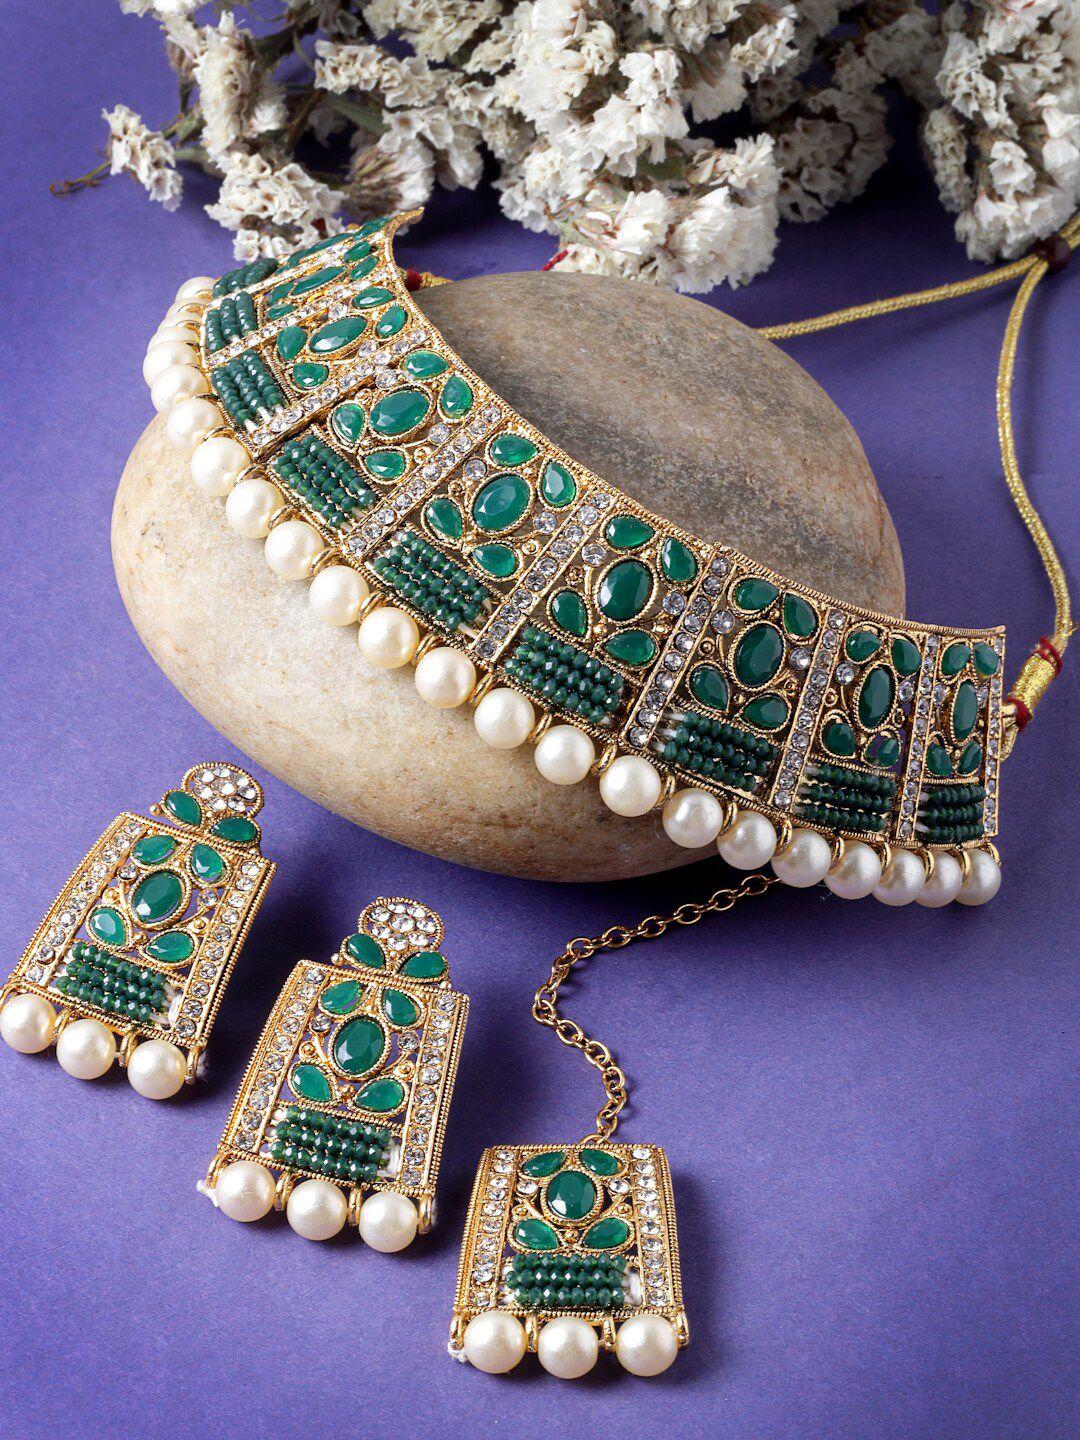 sukkhi gold-plated stone-studded & pearls beaded choker necklace jewellery set